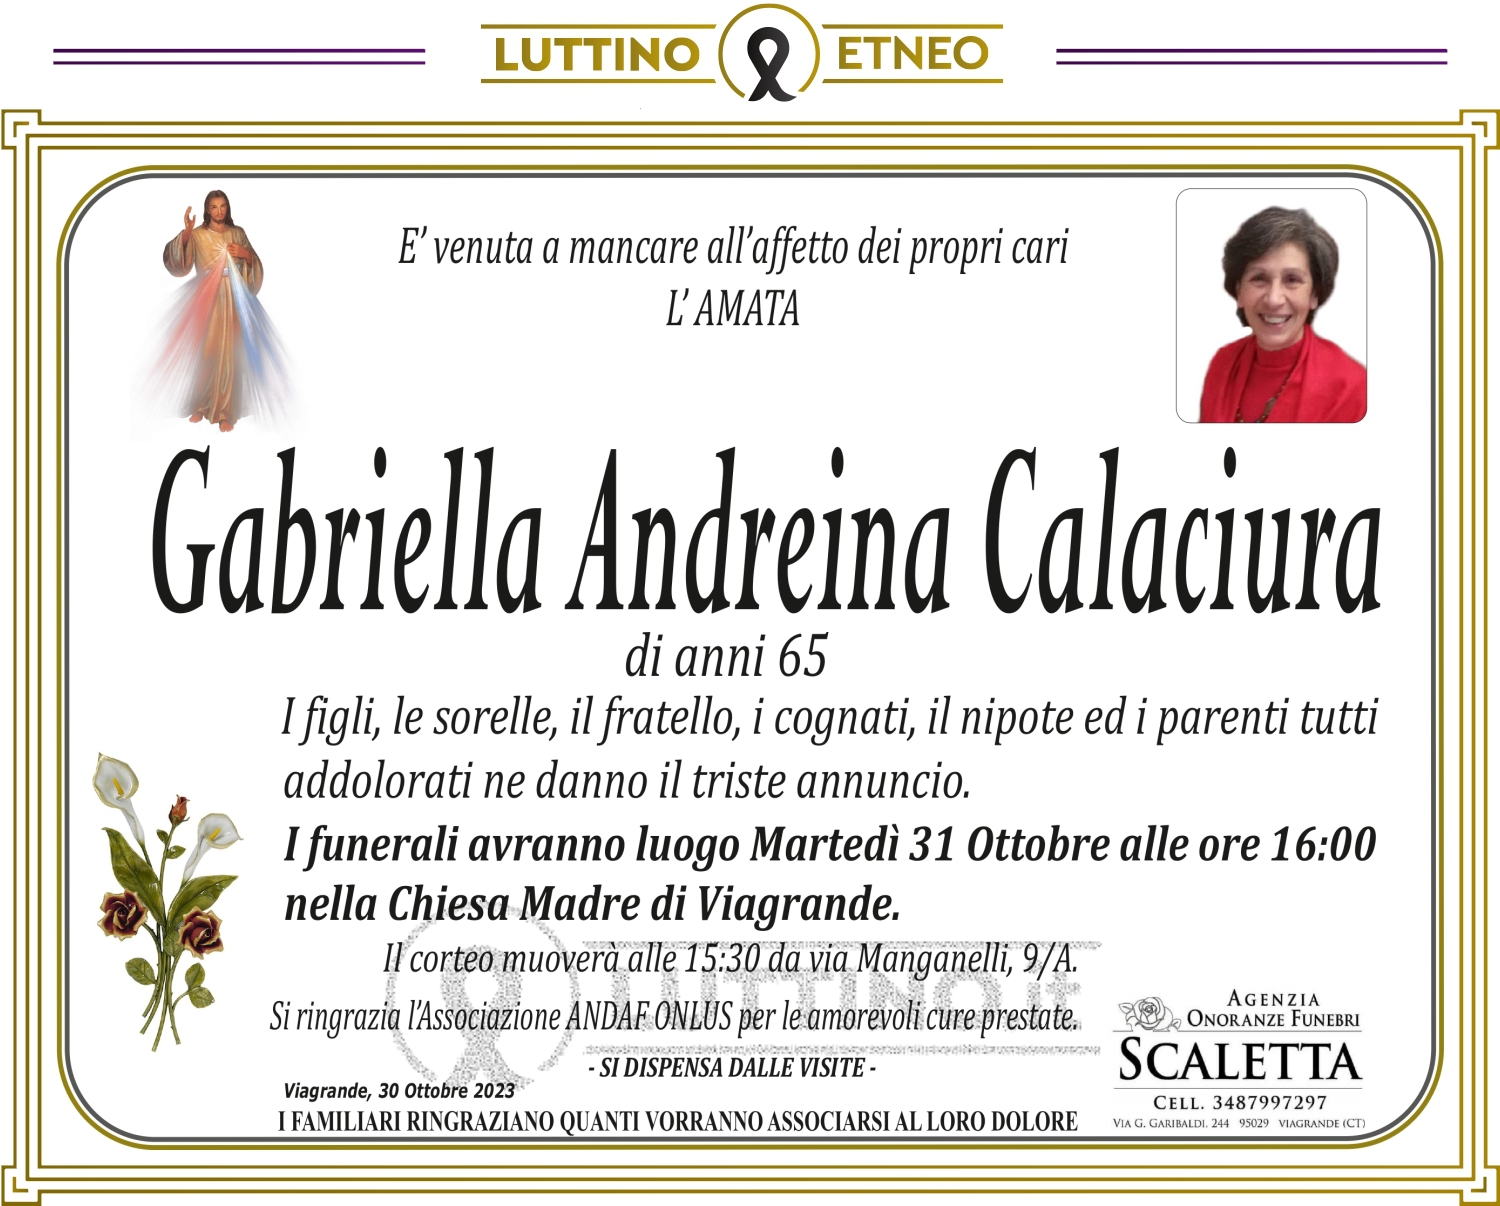 Gabriella Andreina Calaciura